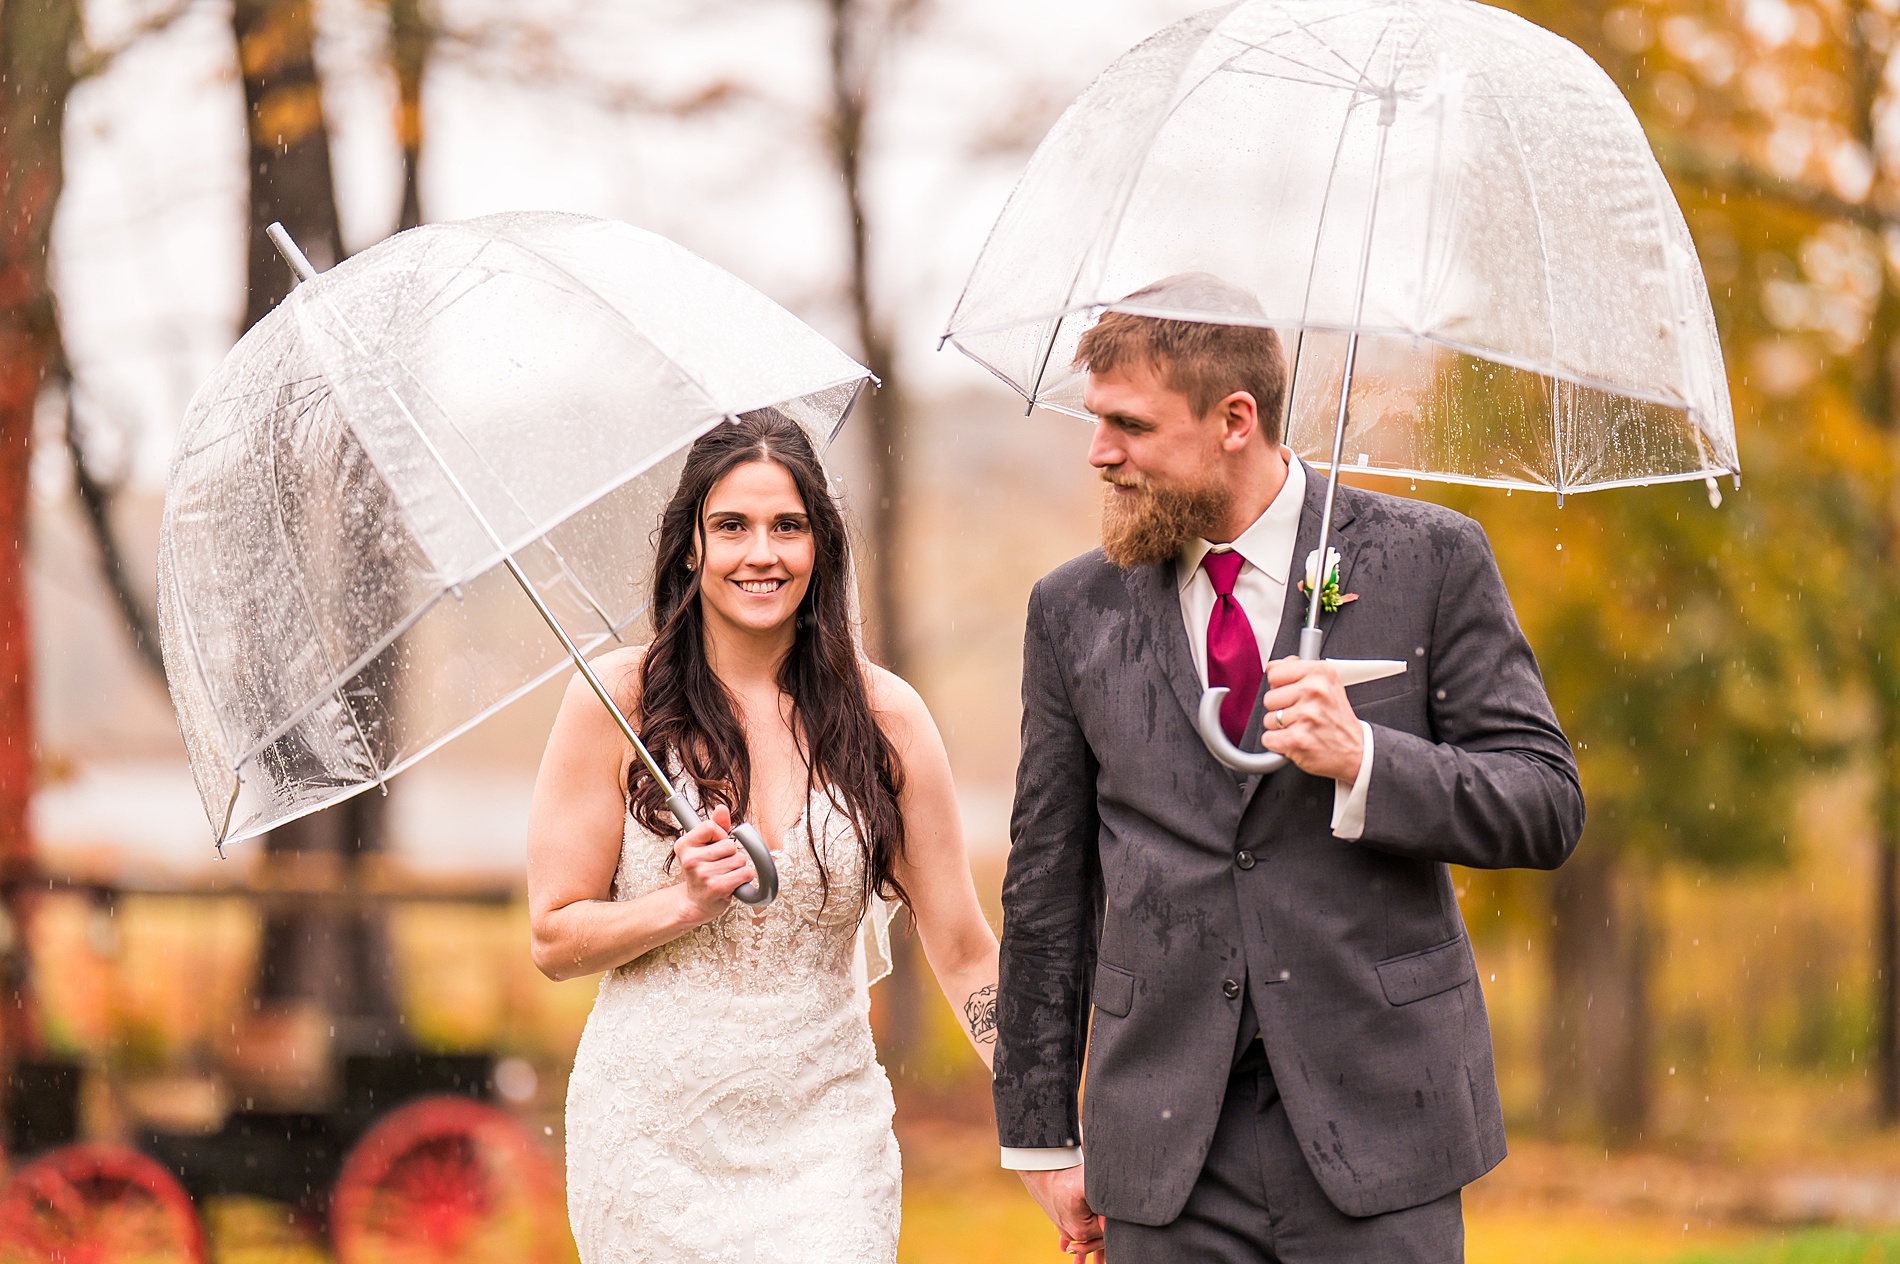 New Hampshire fall wedding portraits in the rain